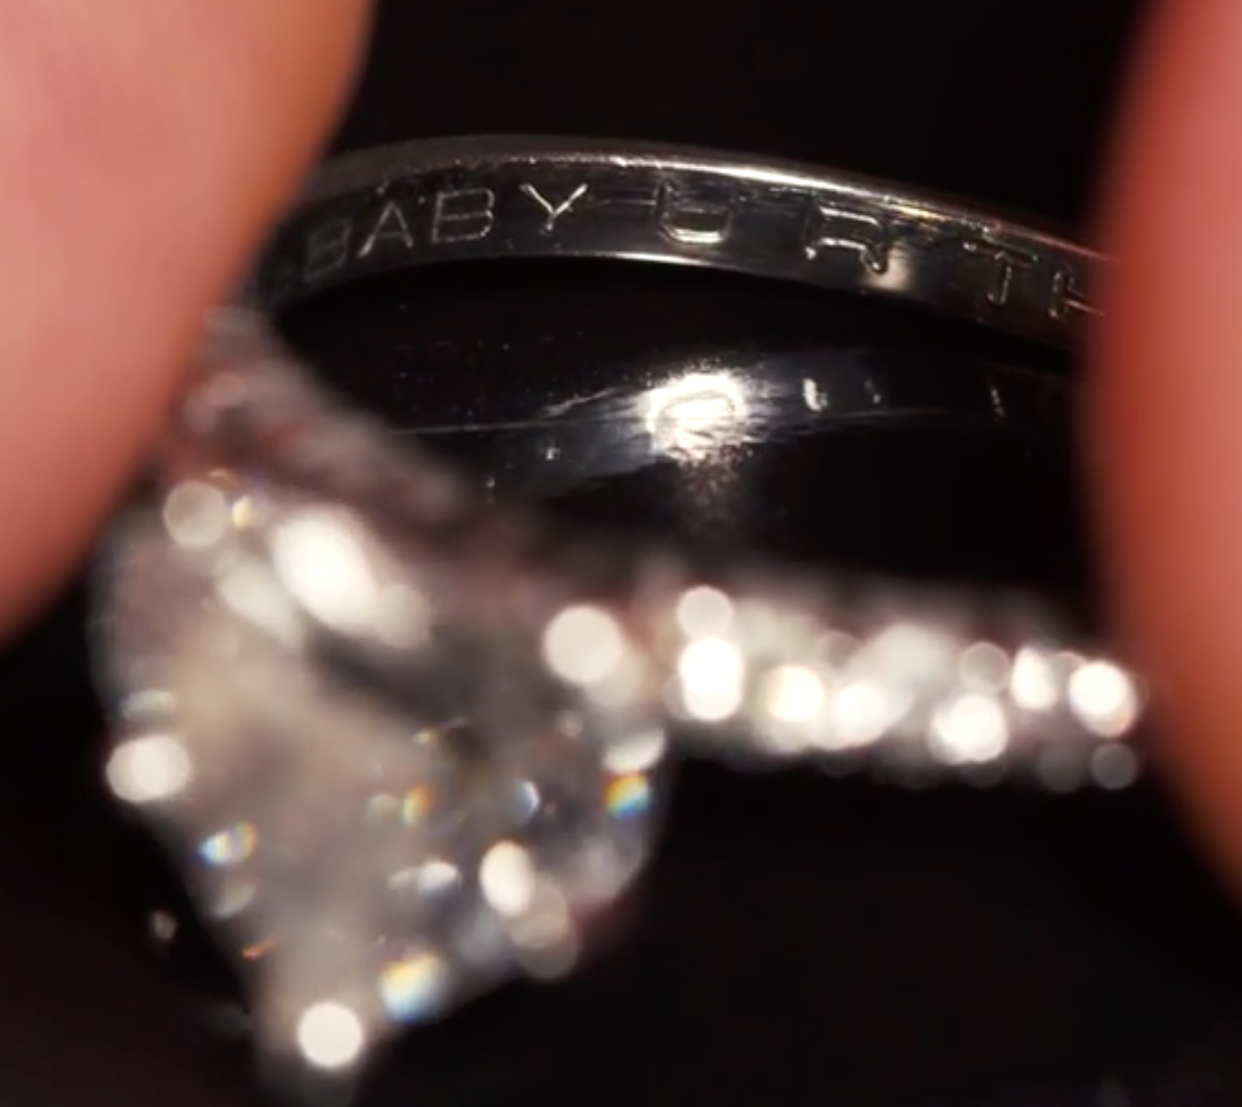 Kurtts had her engagement ring engraved with lyrics from the Elton John song "The One" (Courtesy: Lynn Kurtts).